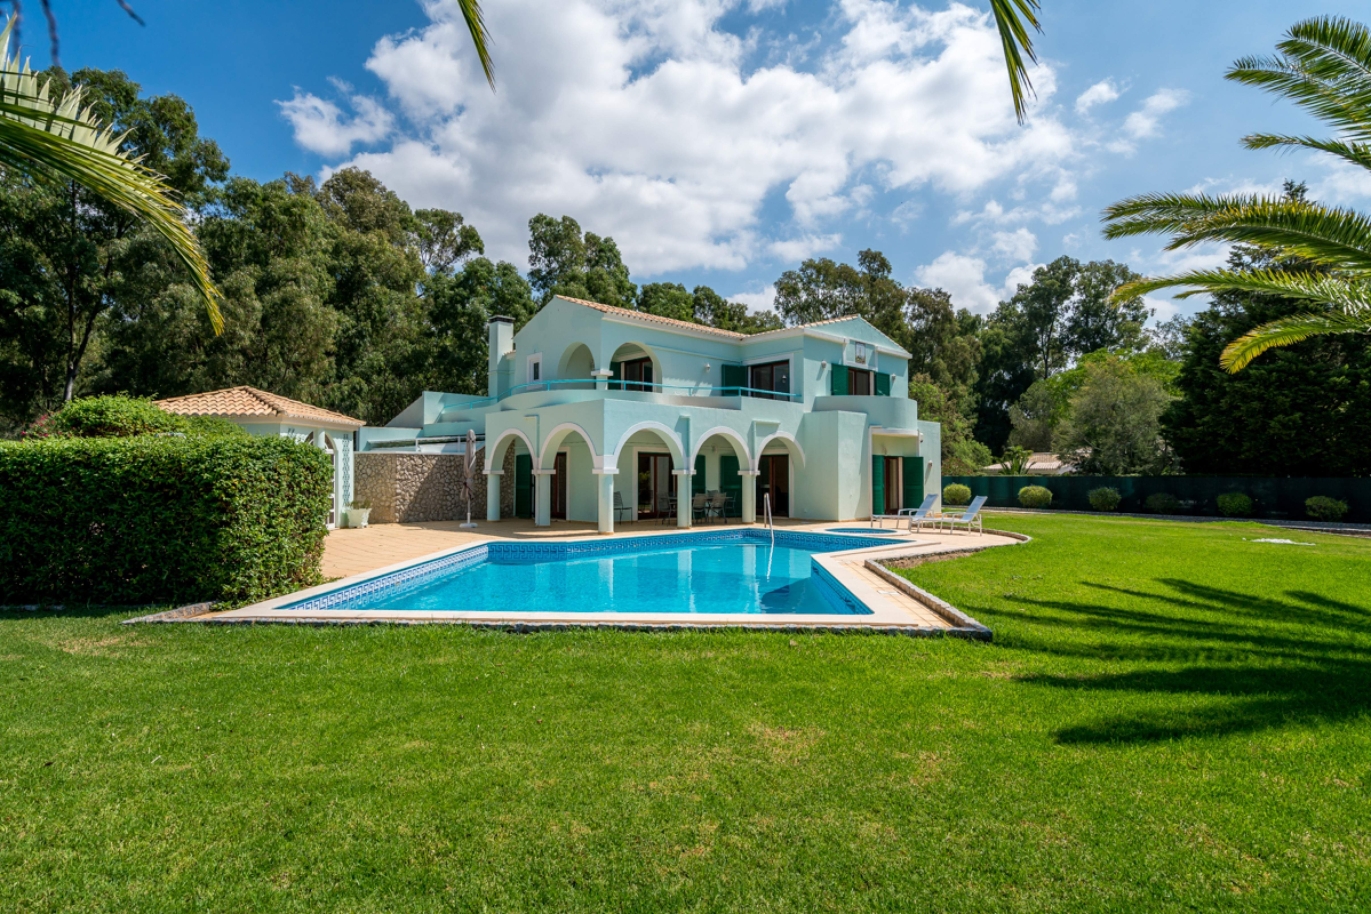 Sale of villa with garden and pool in Penina, Alvor, Algarve, Portugal_113909